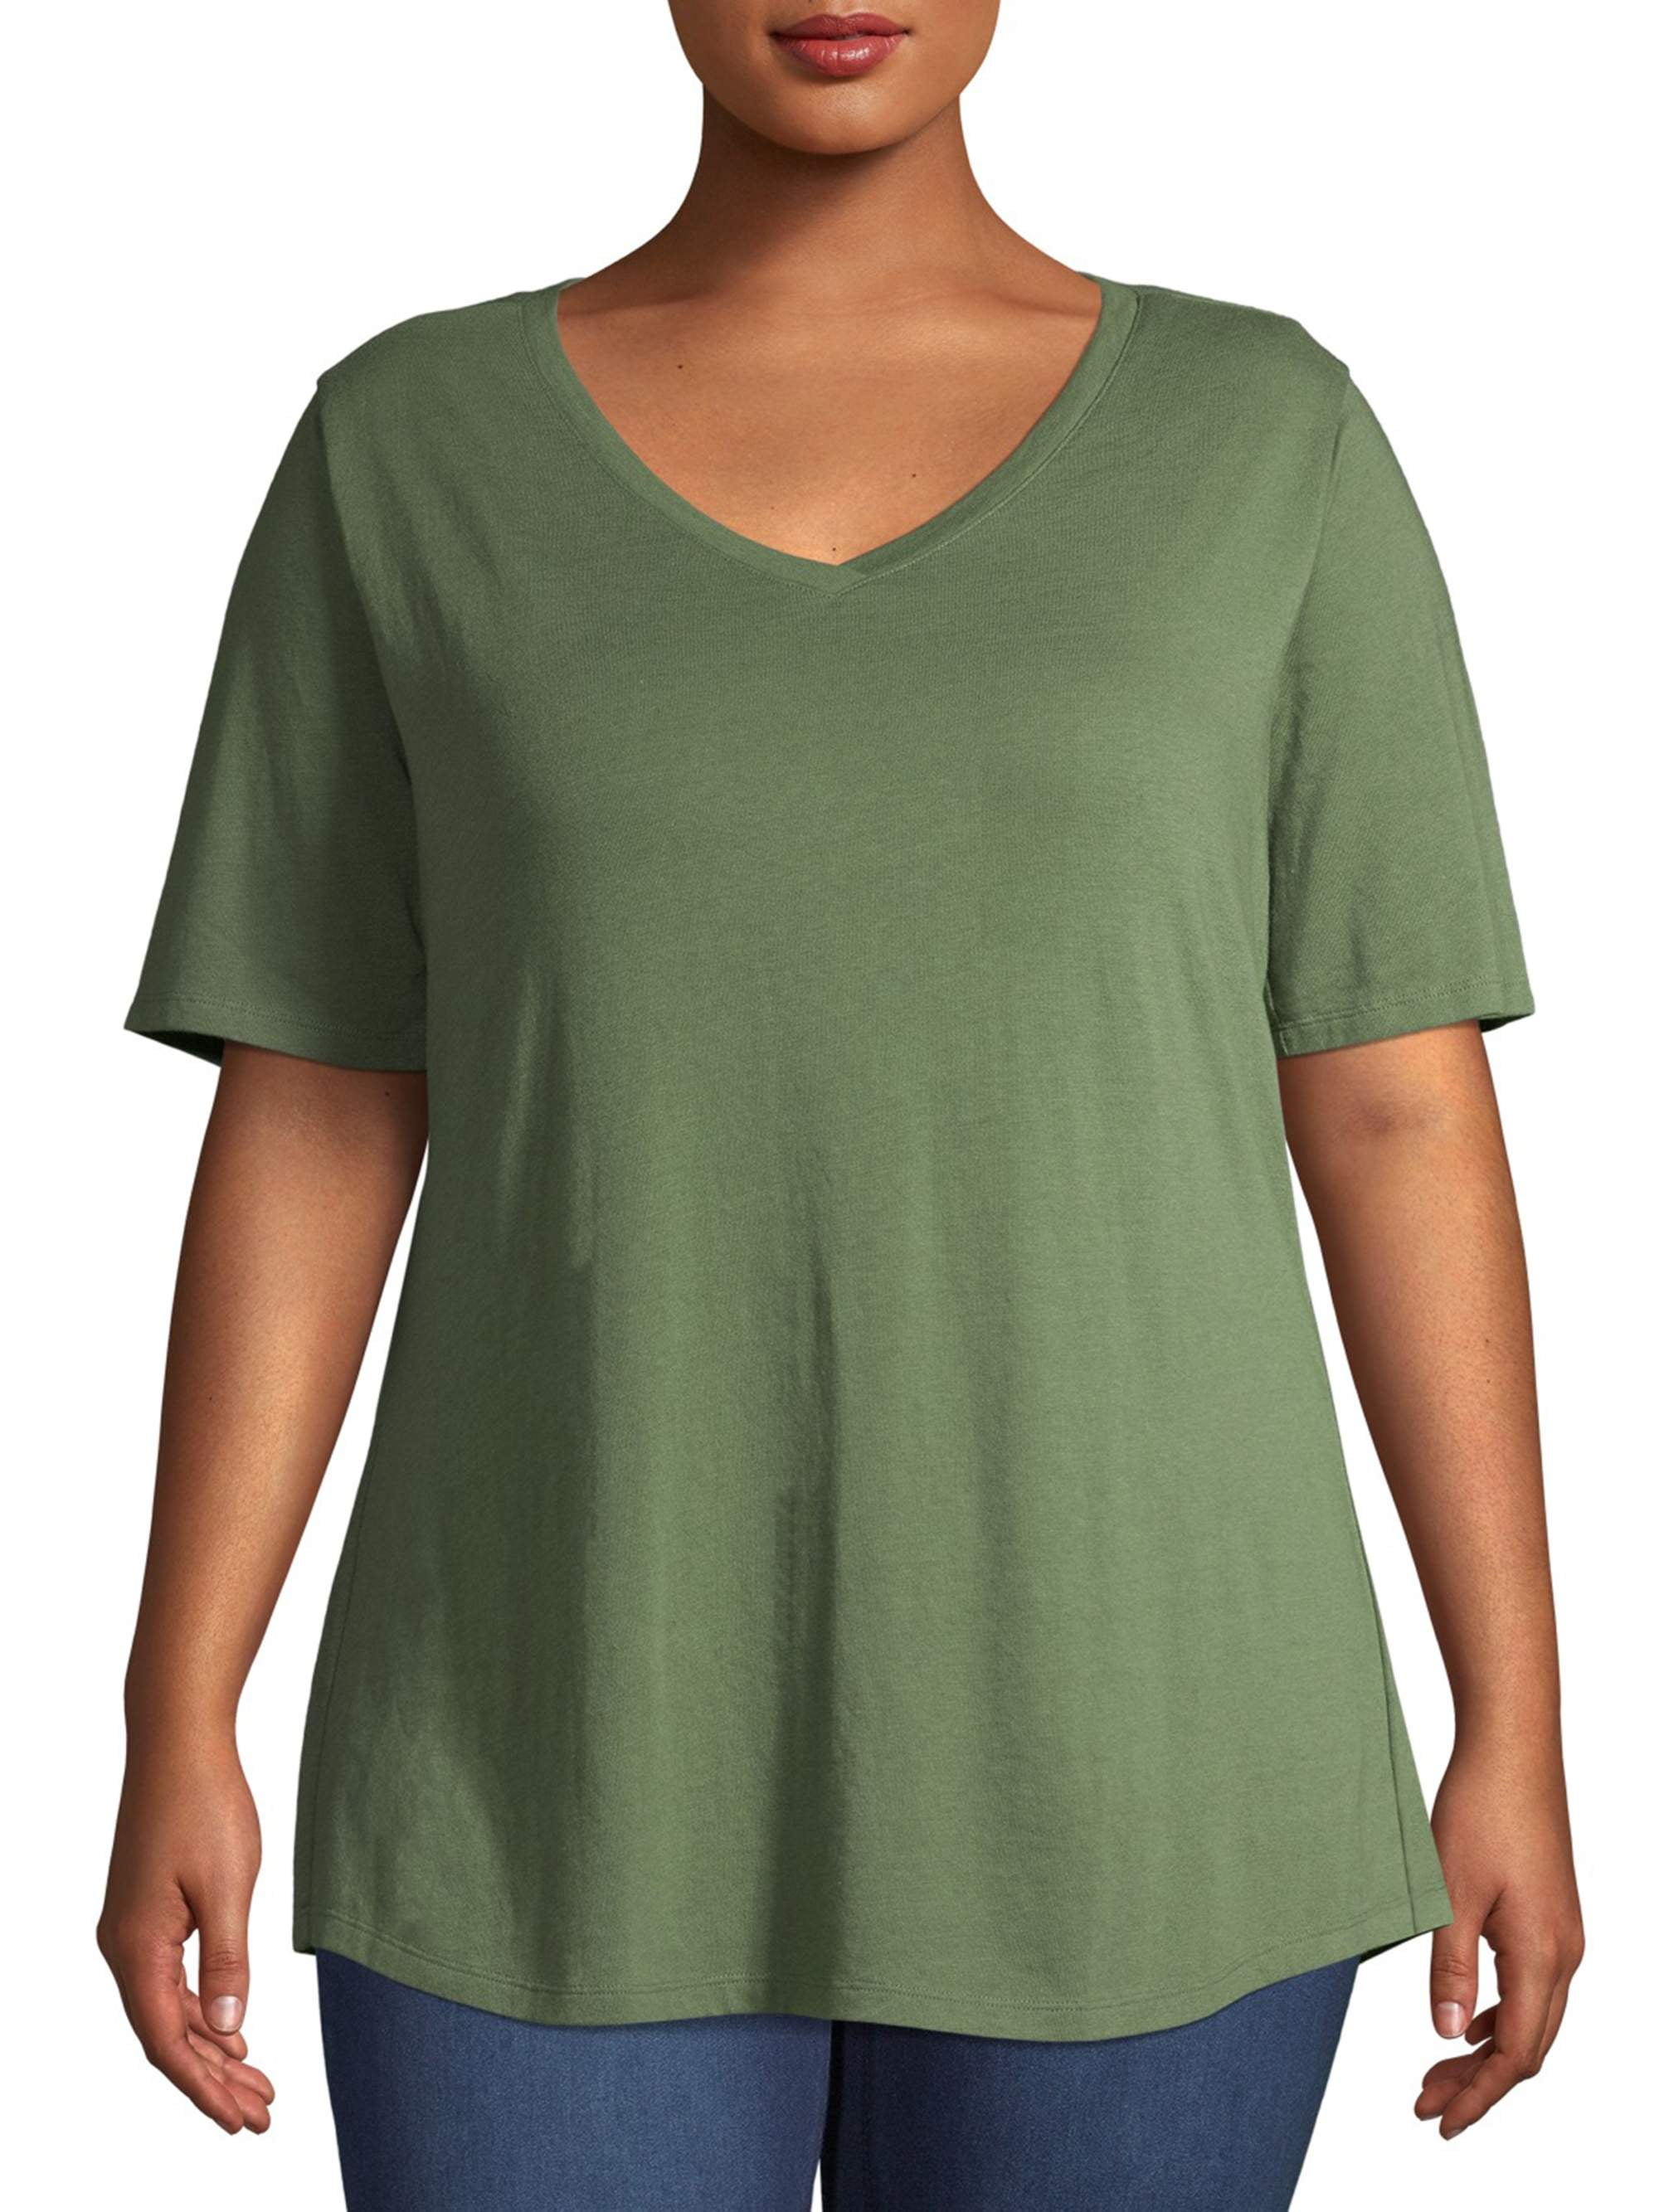 Terra & Sky Women’s T.shirt Grey Size 5X 32W-34W 100% Cotton Short Sleeves New